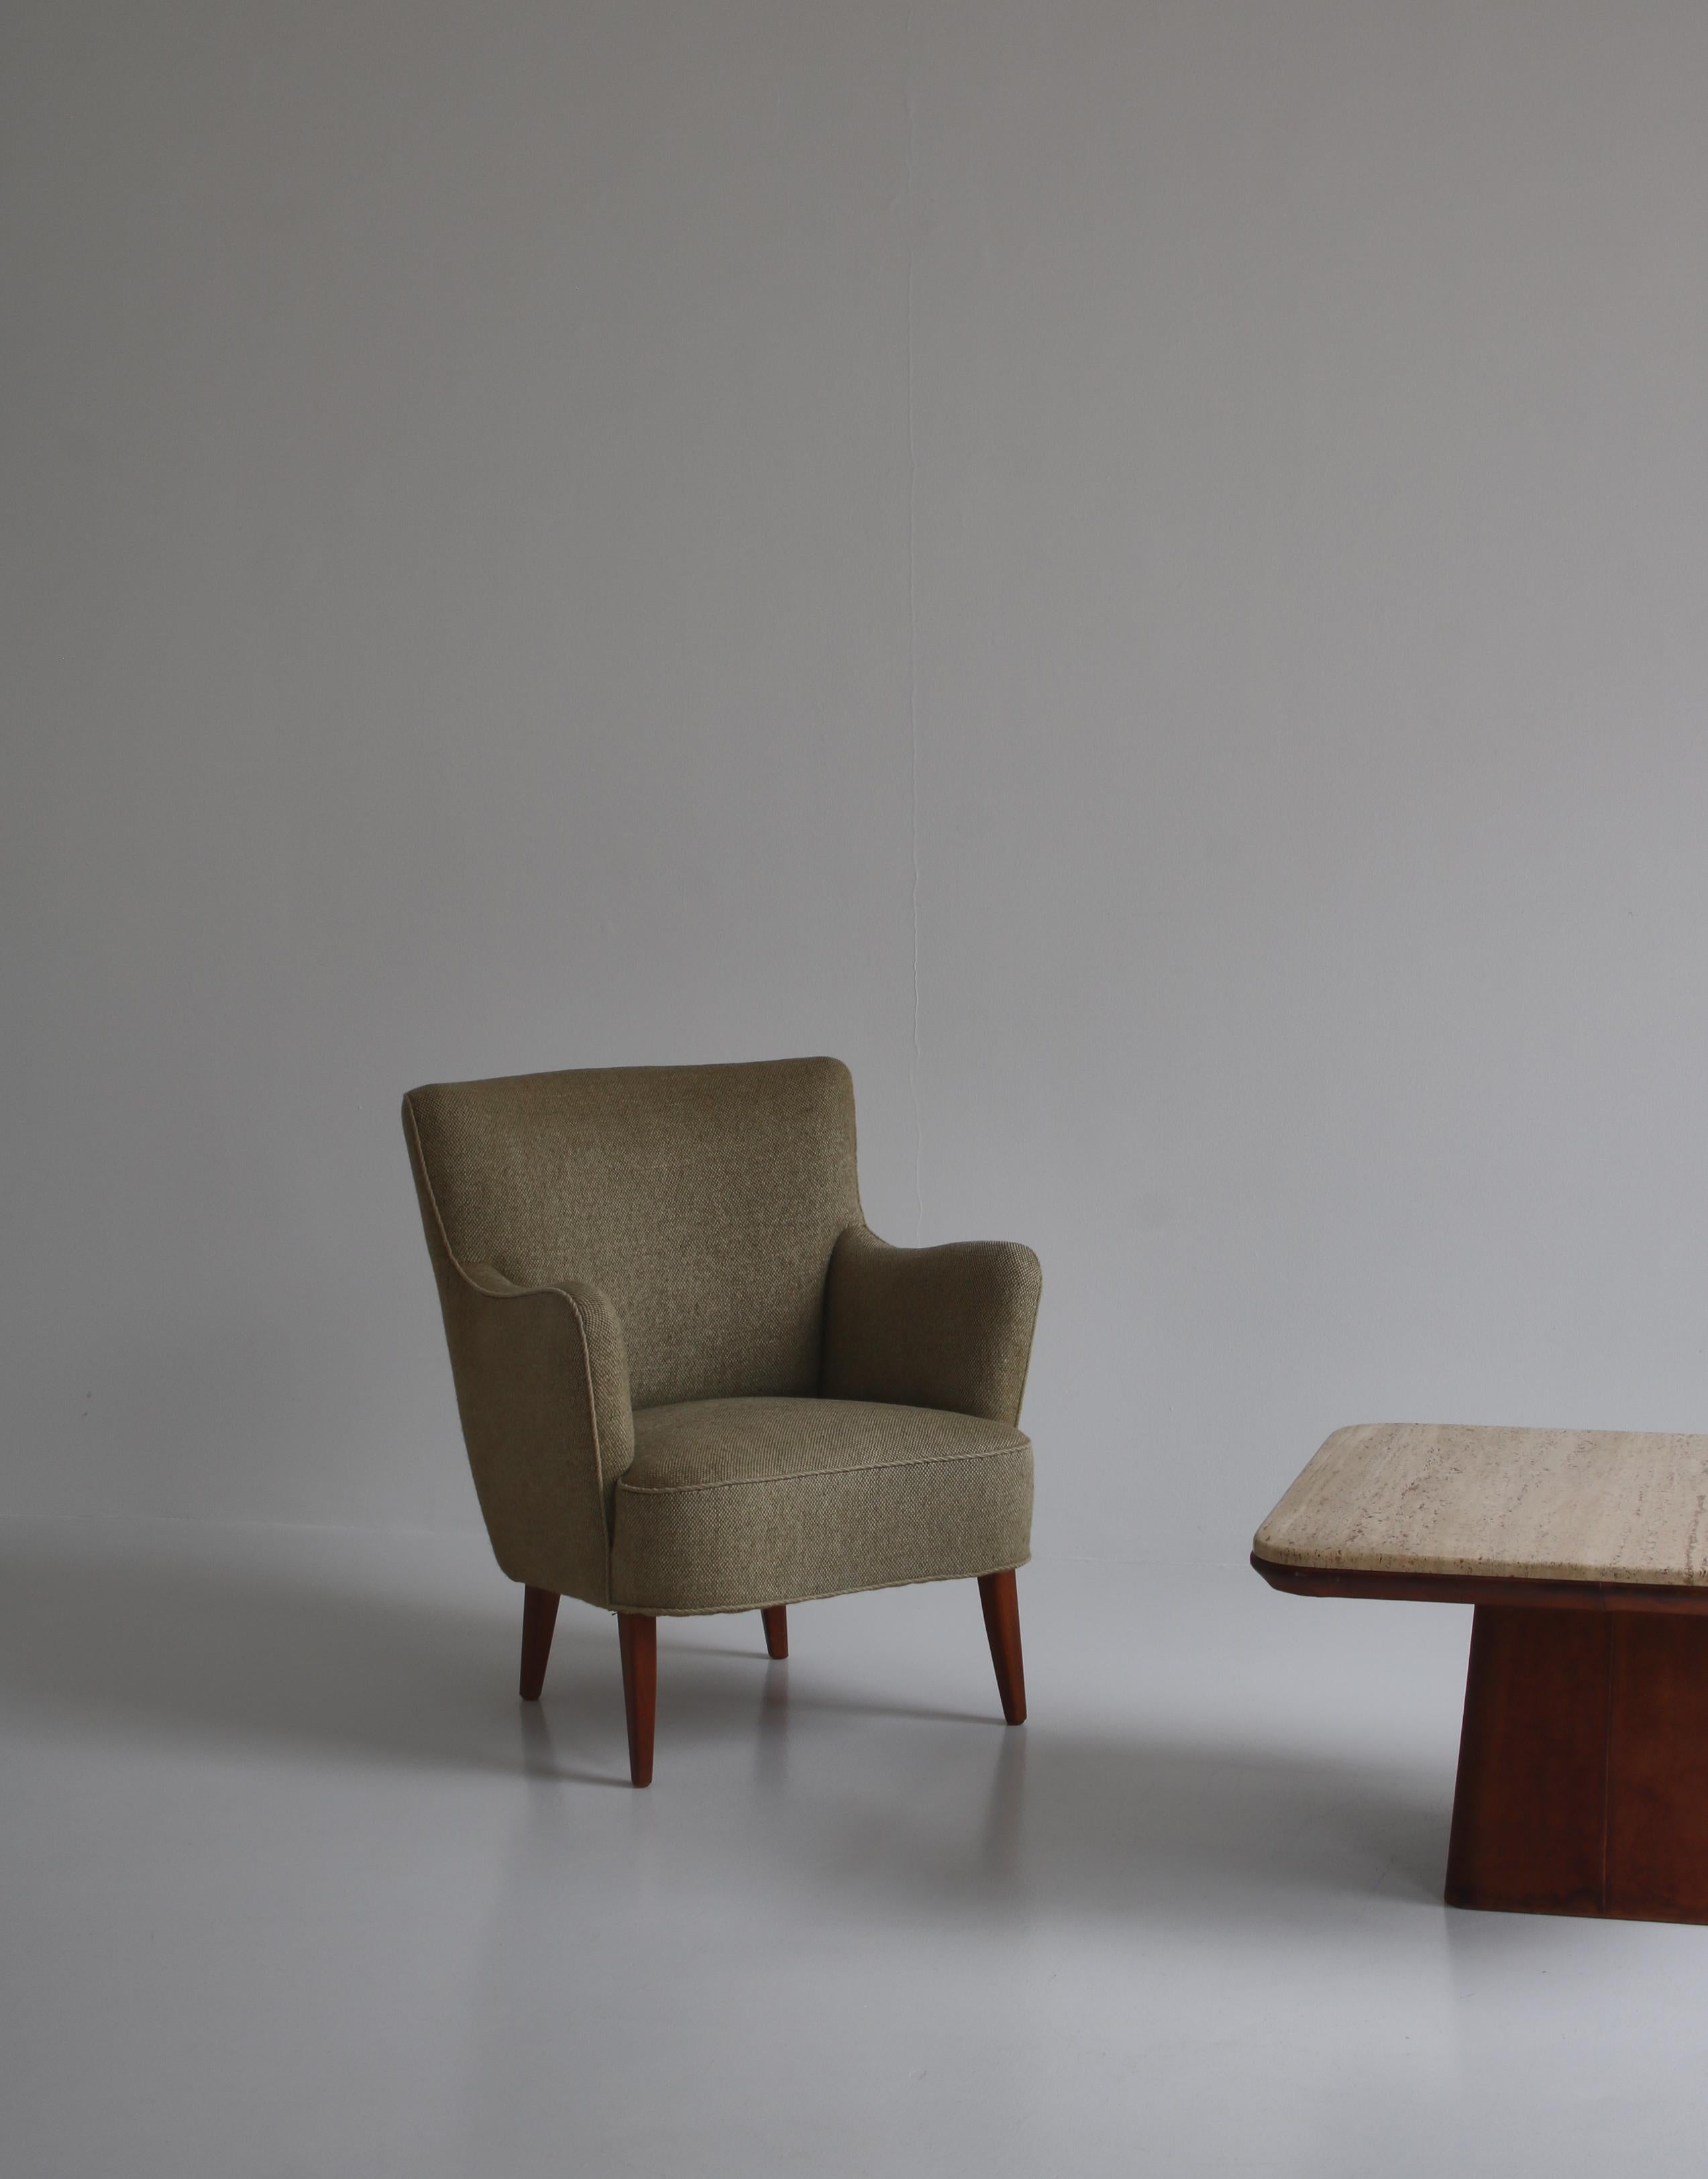 Danish Modern Easy Chair in Beech & Wool Upholstery by Hvidt & Mølgaard, 1950s For Sale 9